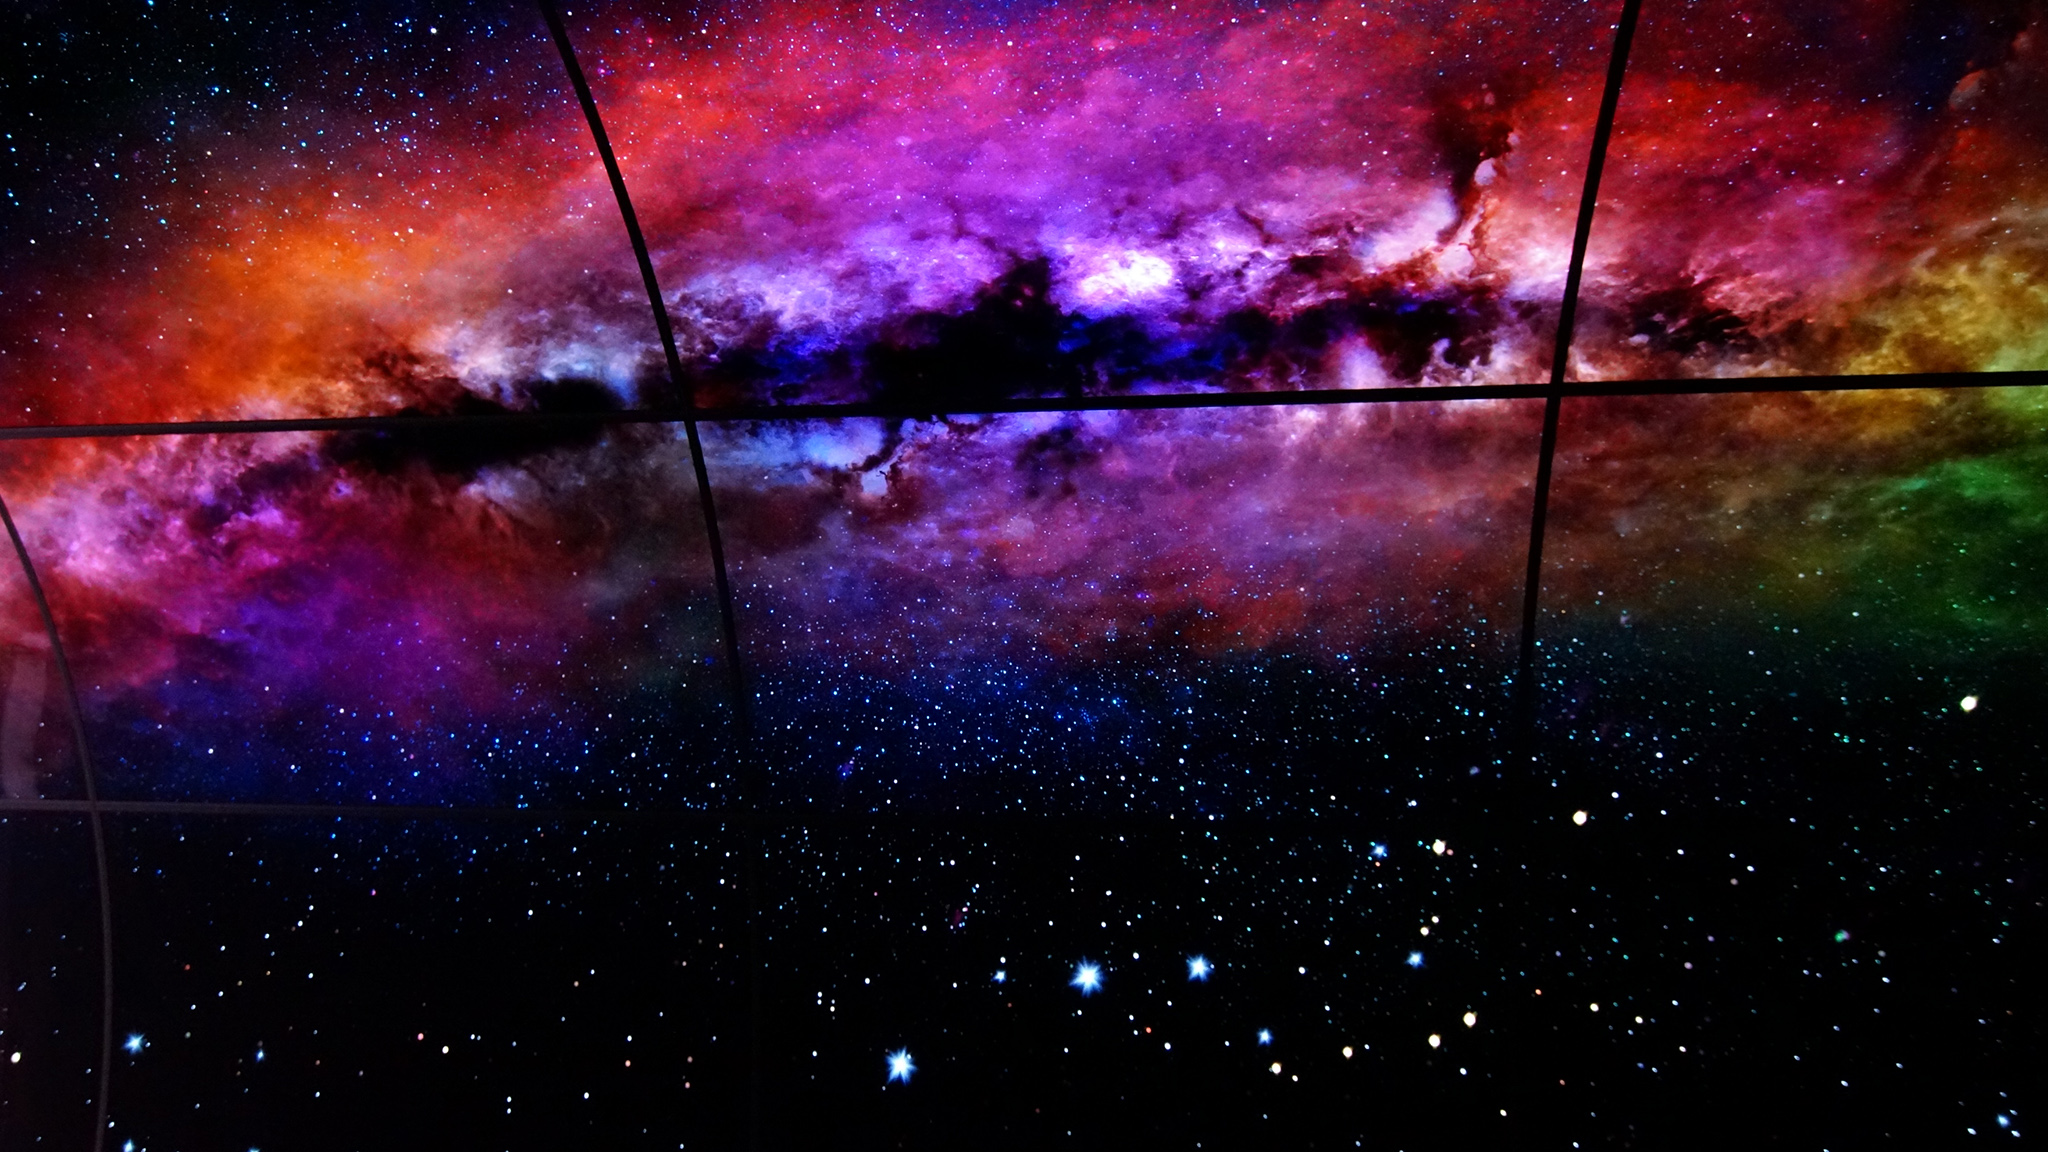 M4a4 desolate space безлюдный космос фото 56